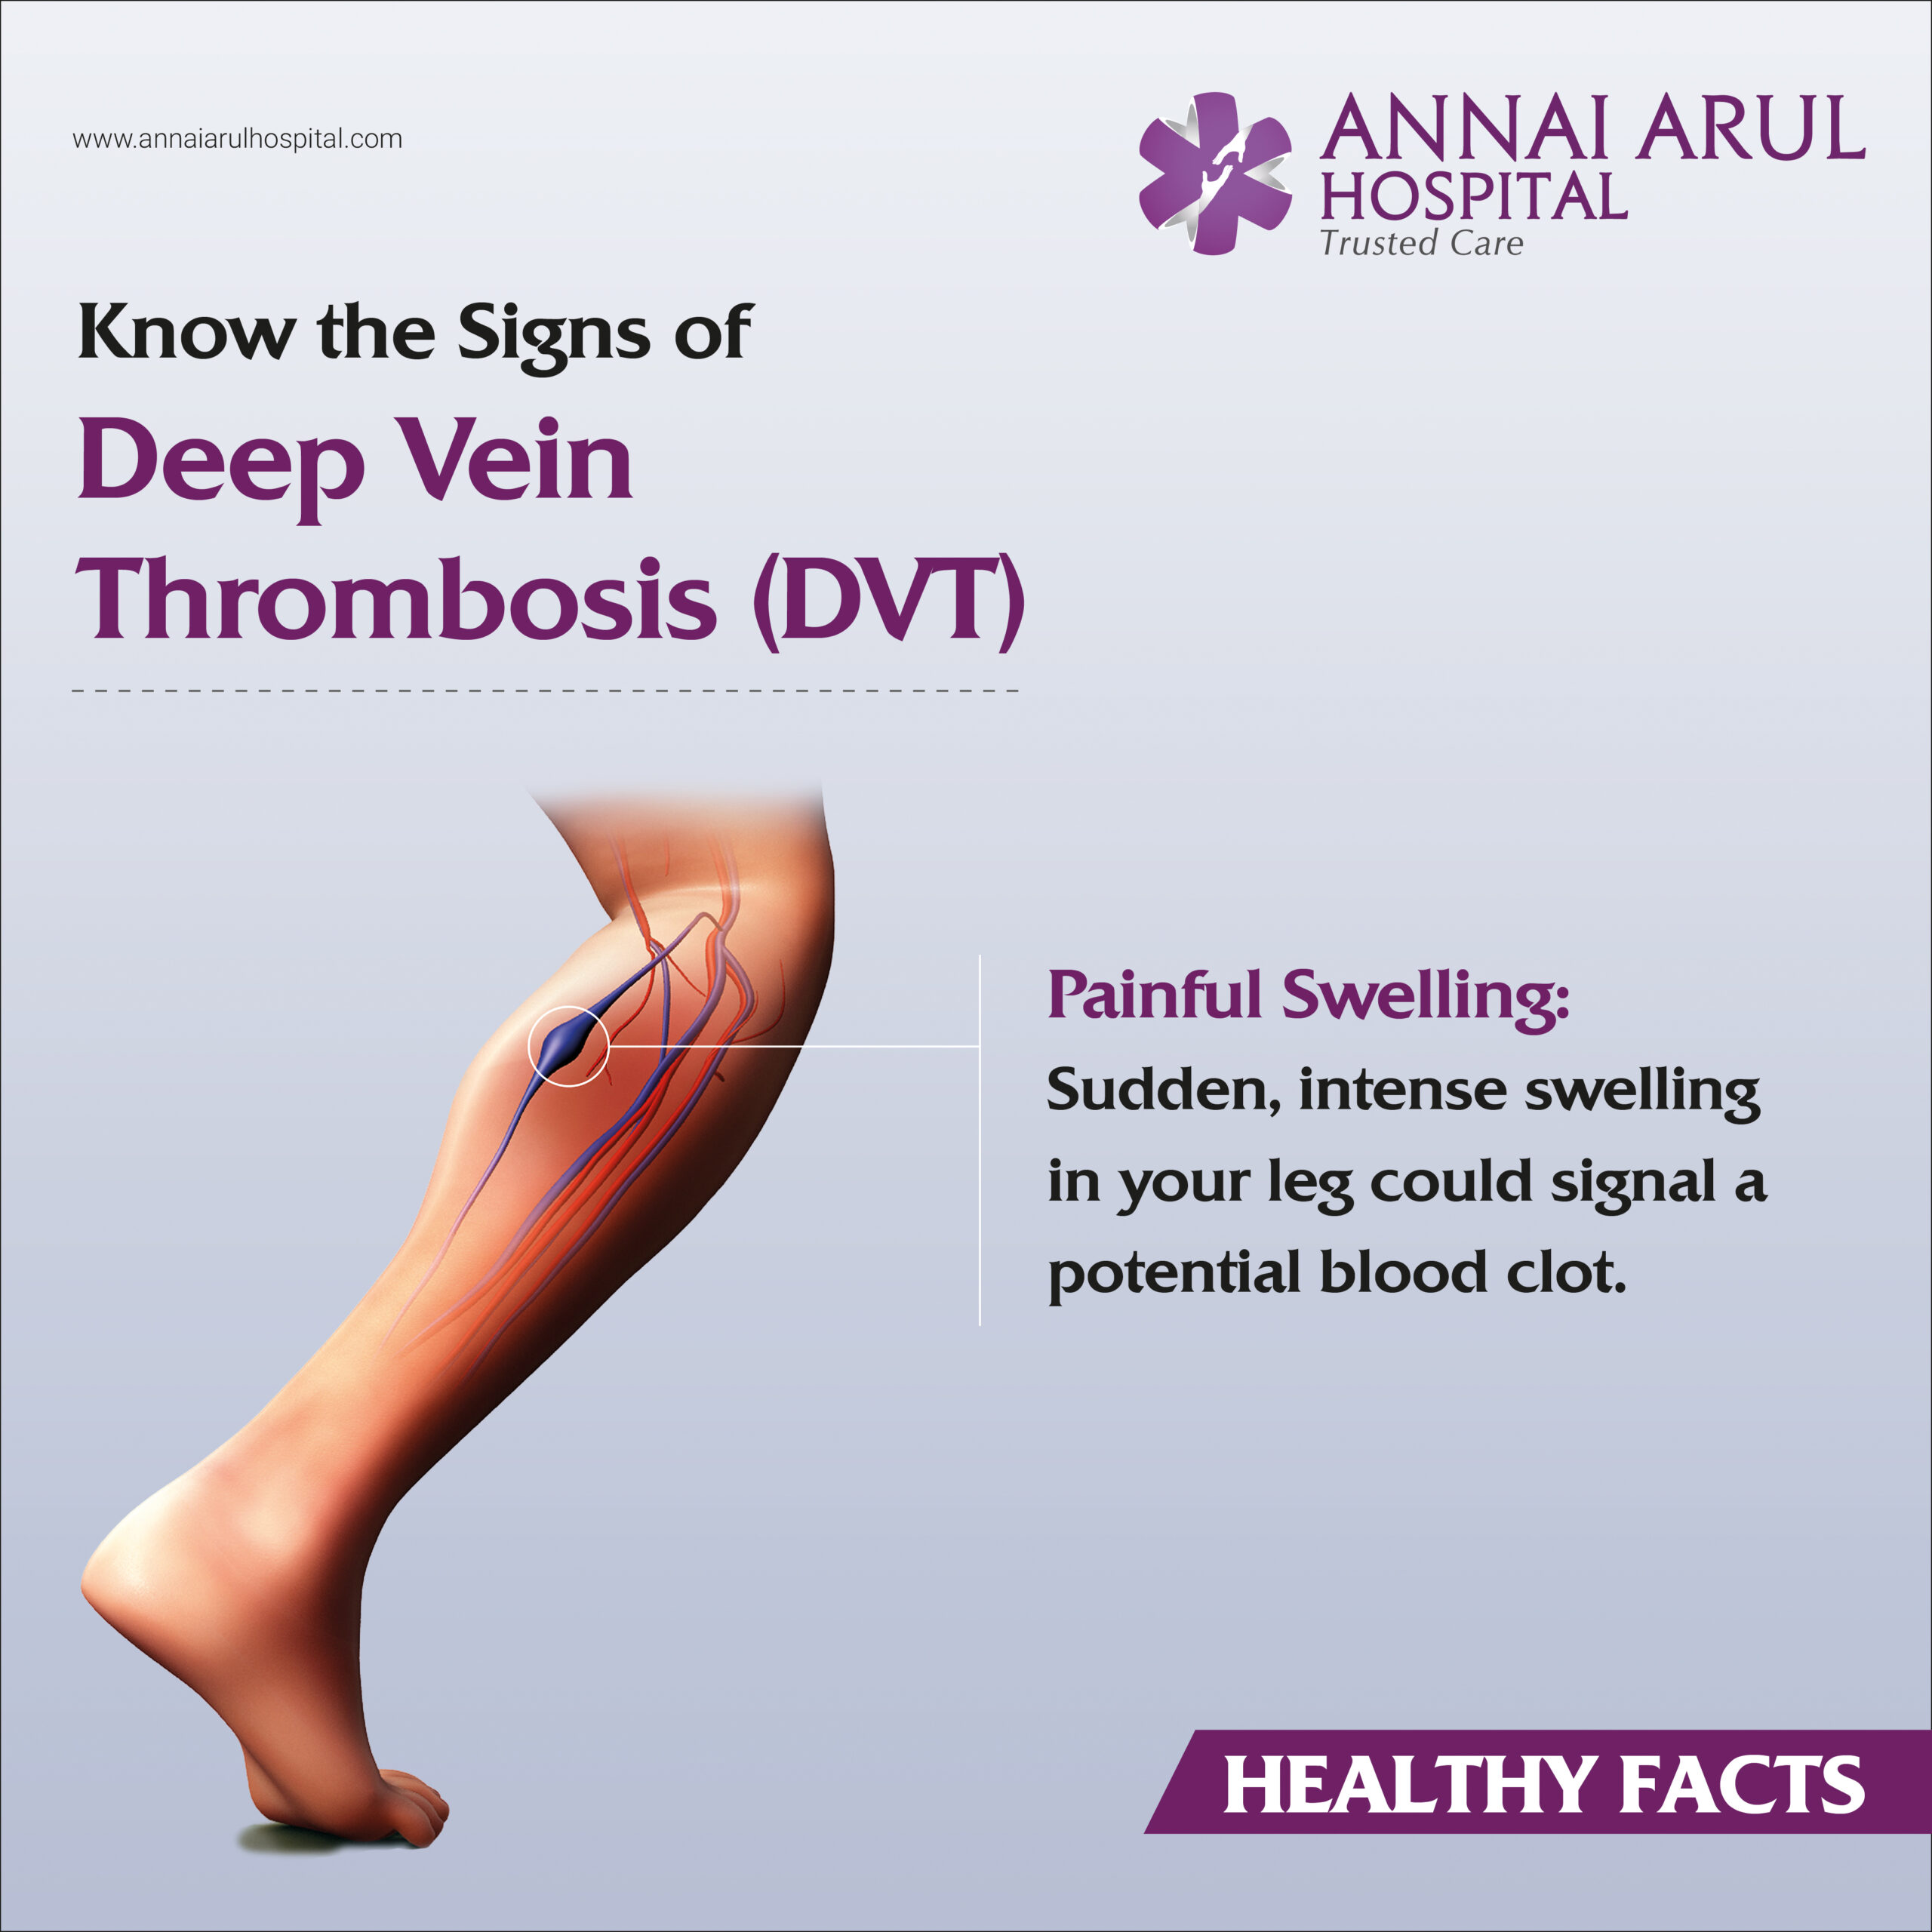 Deep vein thrombosis (DVT) - symptoms, signs and treatment